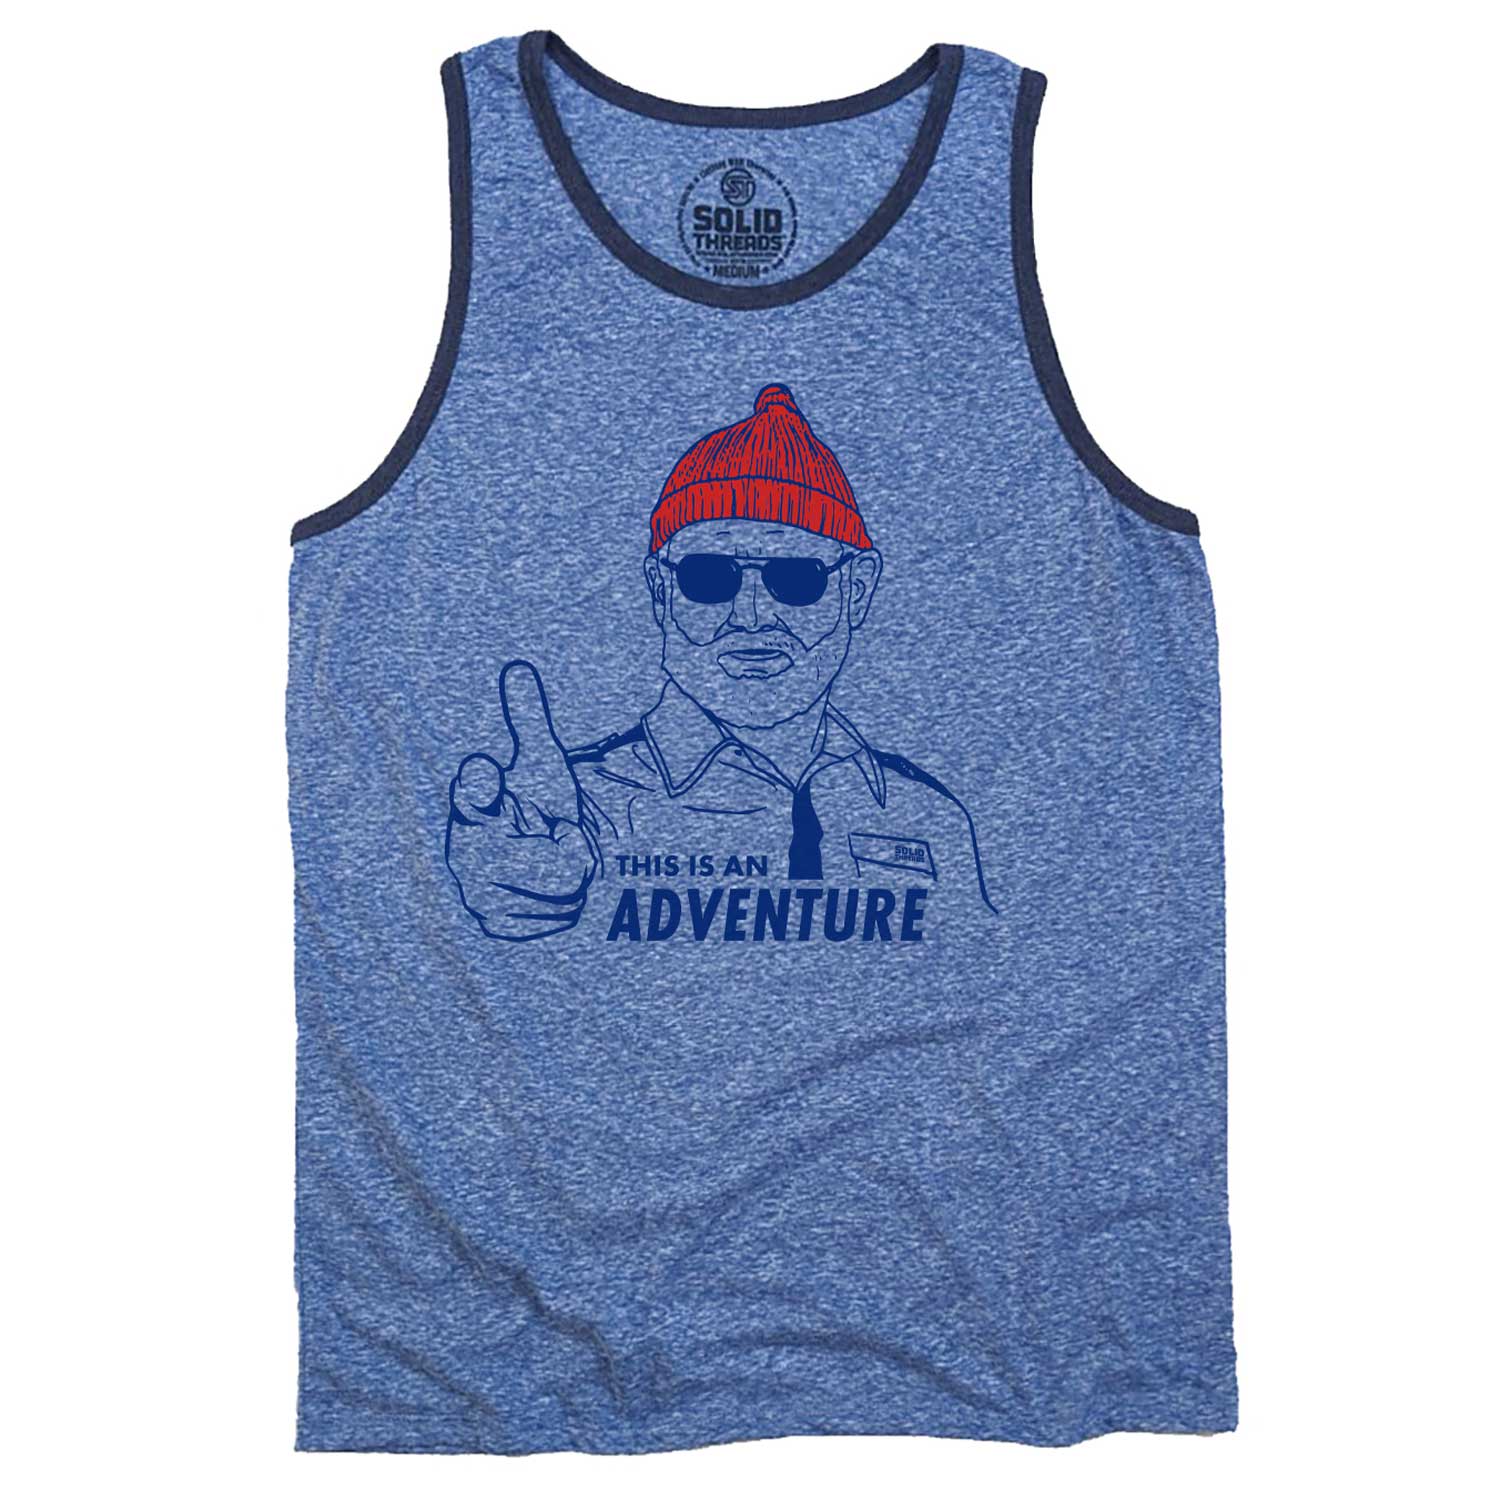 Men's Zissou Adventure Vintage Graphic Tank Top | Cool Life Aquatic T-shirt | Solid Threads